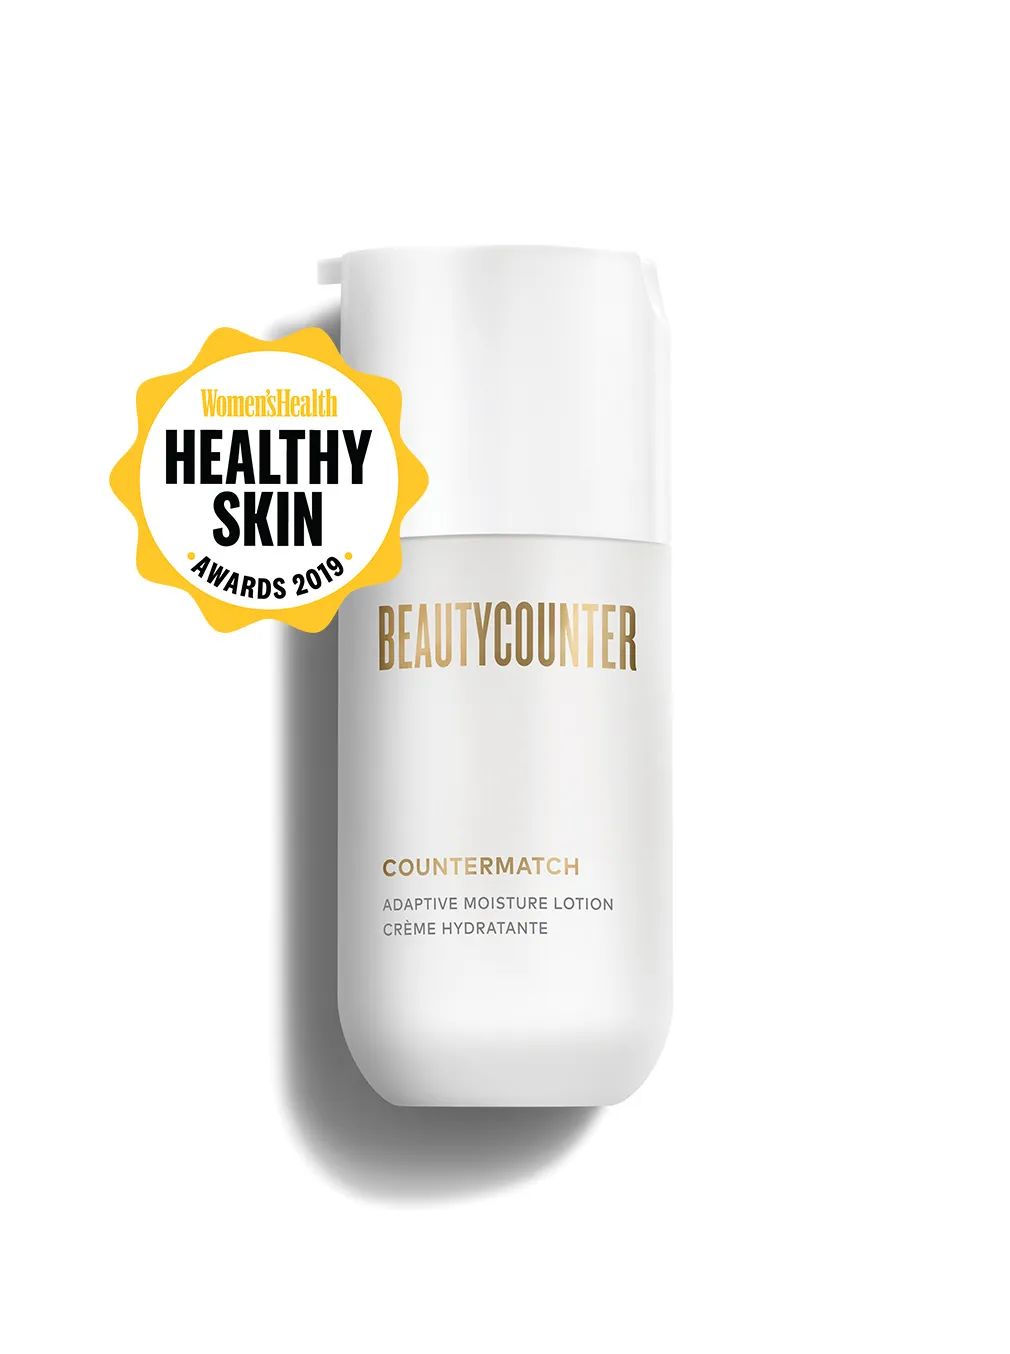 Countermatch Adaptive Moisture Lotion - Beautycounter - Skin Care, Makeup, Bath and Body and more... | Beautycounter.com